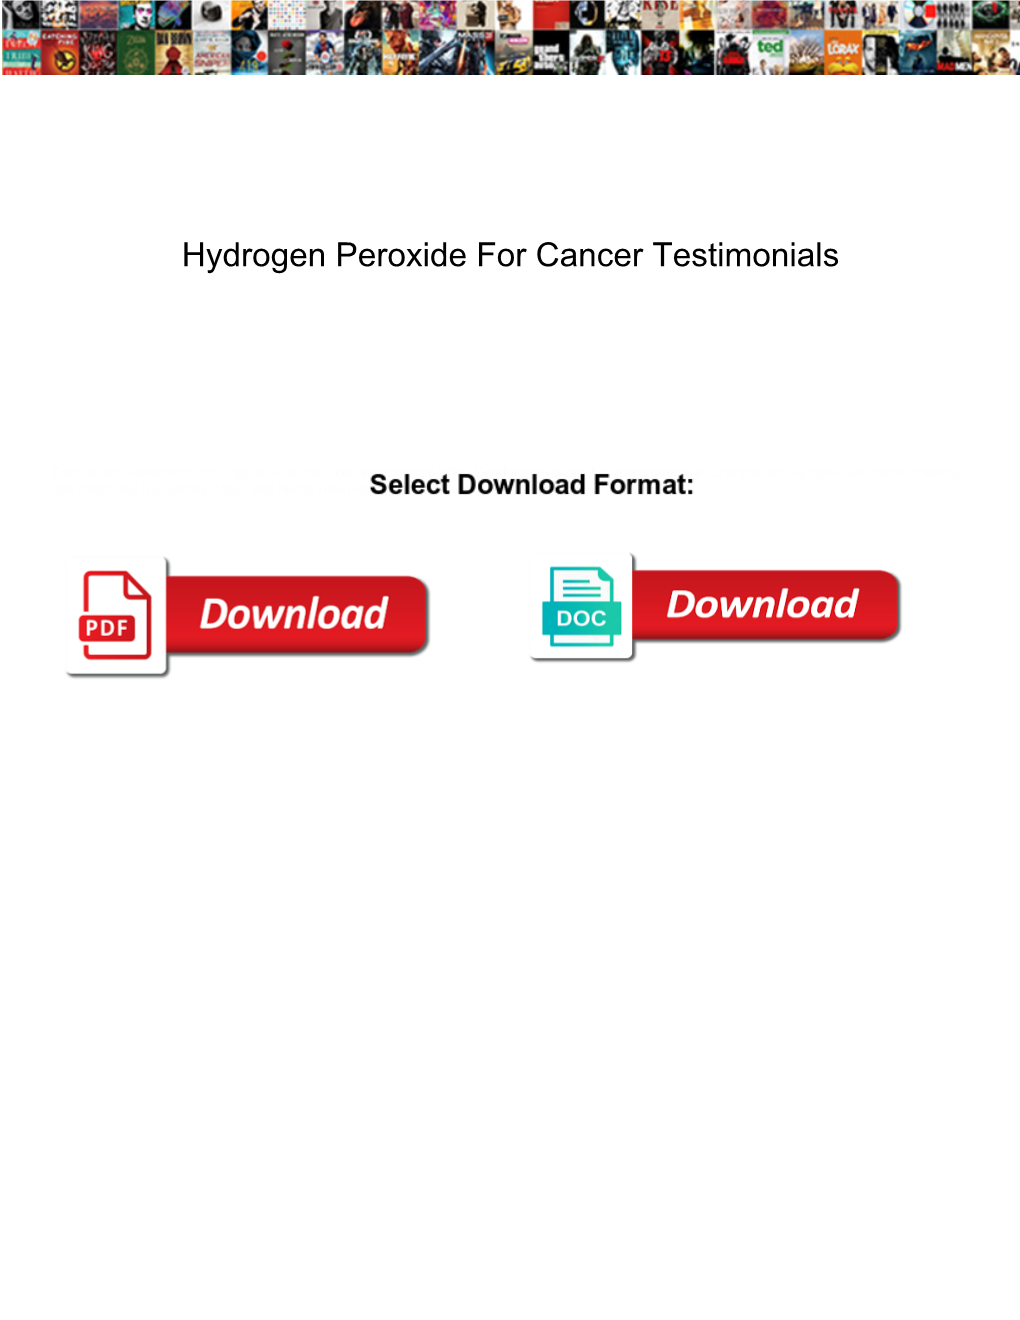 Hydrogen Peroxide for Cancer Testimonials